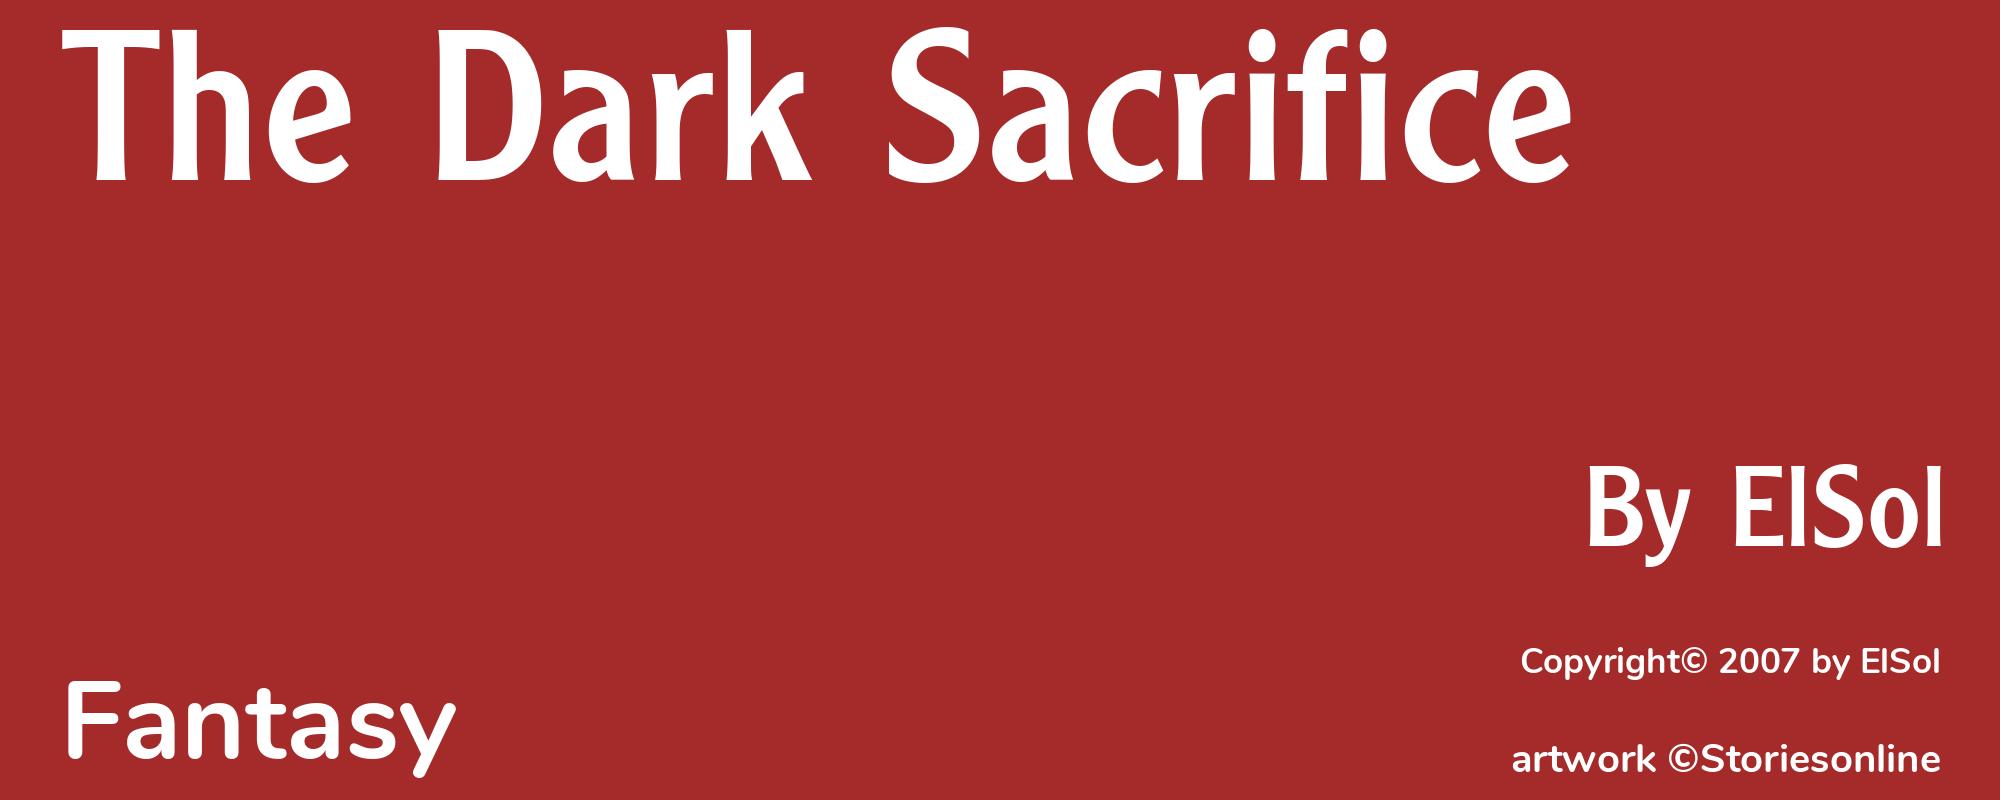 The Dark Sacrifice - Cover